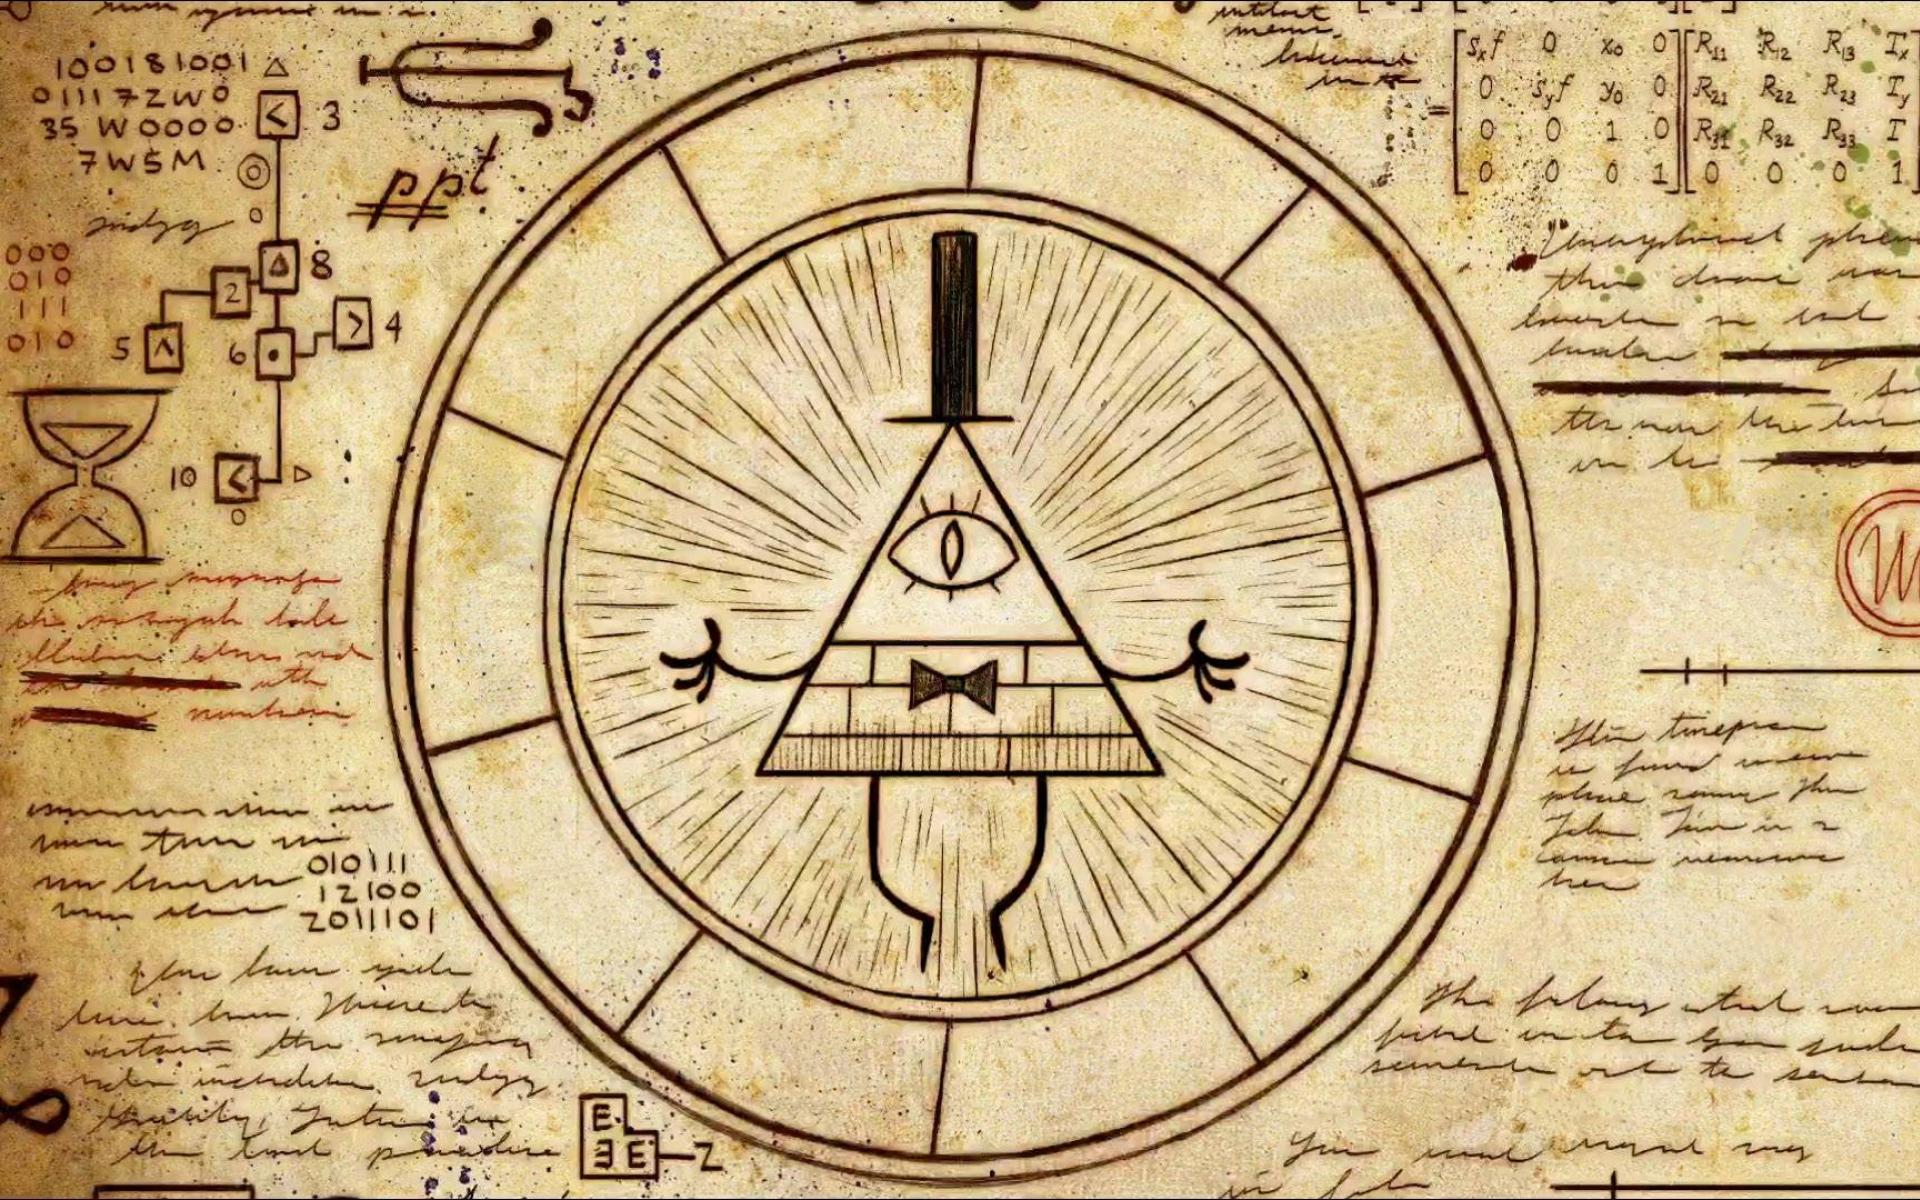 Illuminati Digital Art Shows Symbols Hd Wallpaper